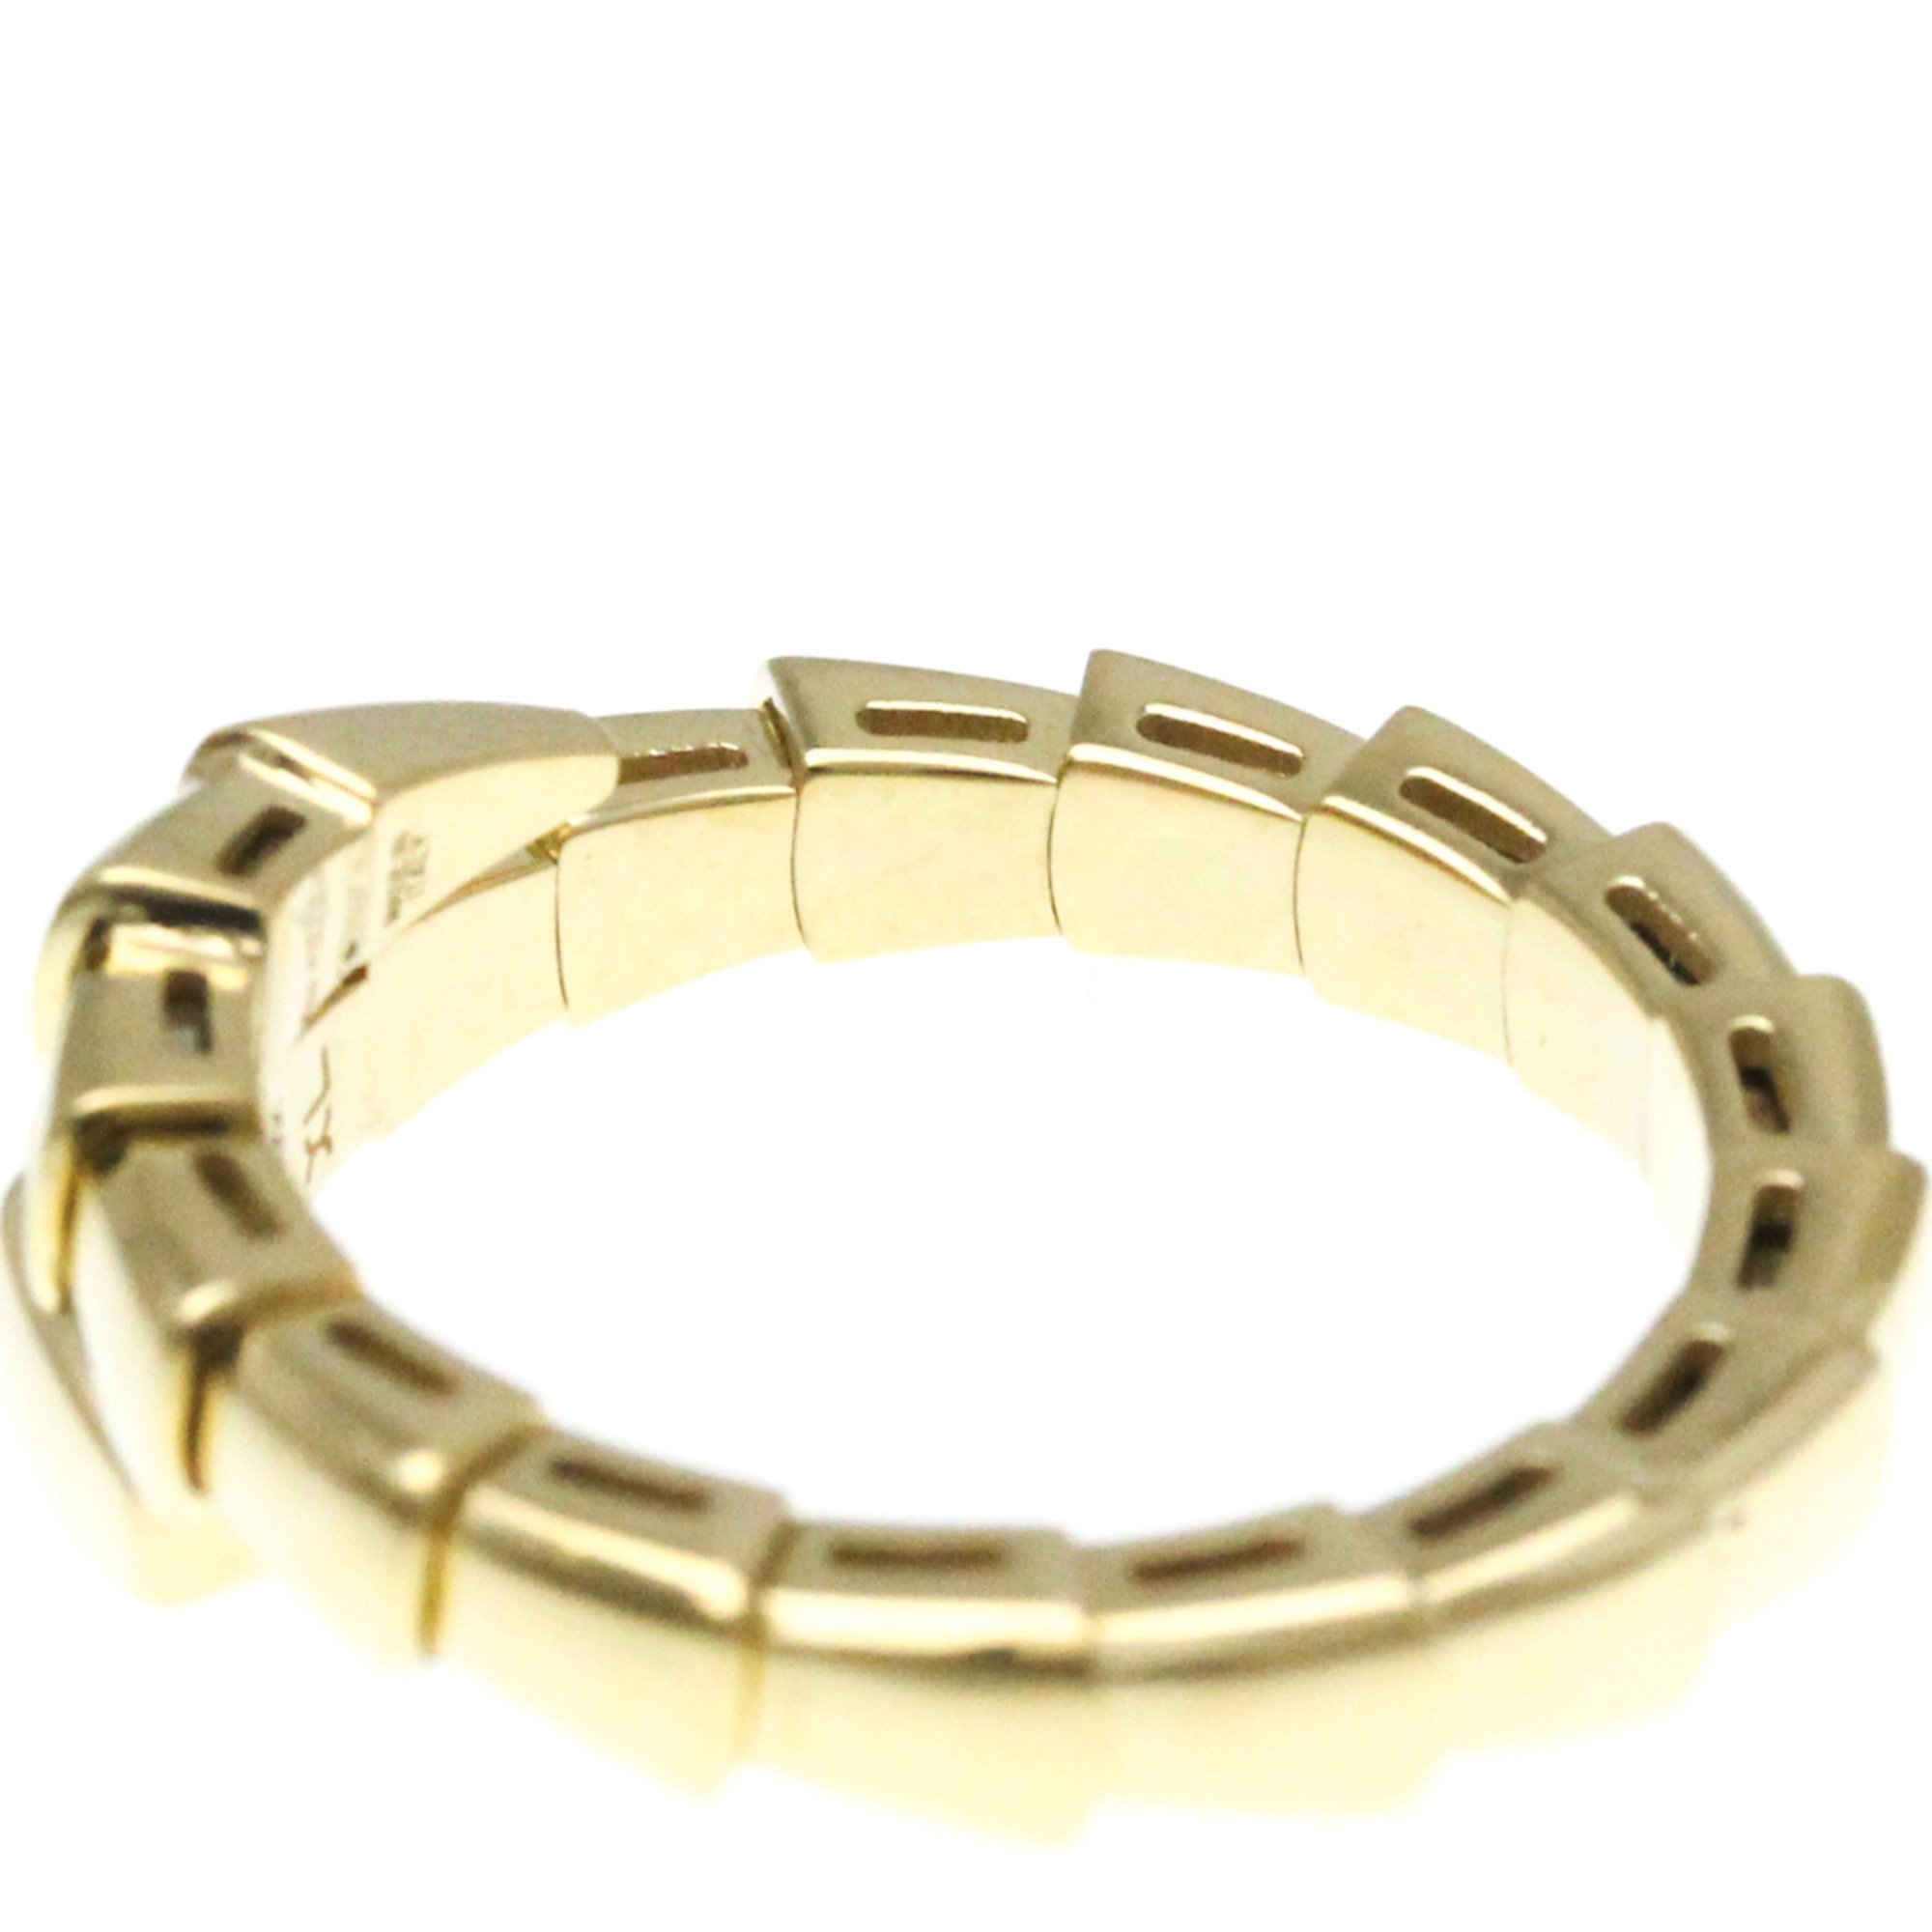 Bvlgari Serpenti Viper Ring Yellow Gold (18K) Fashion No Stone Band Ring Gold